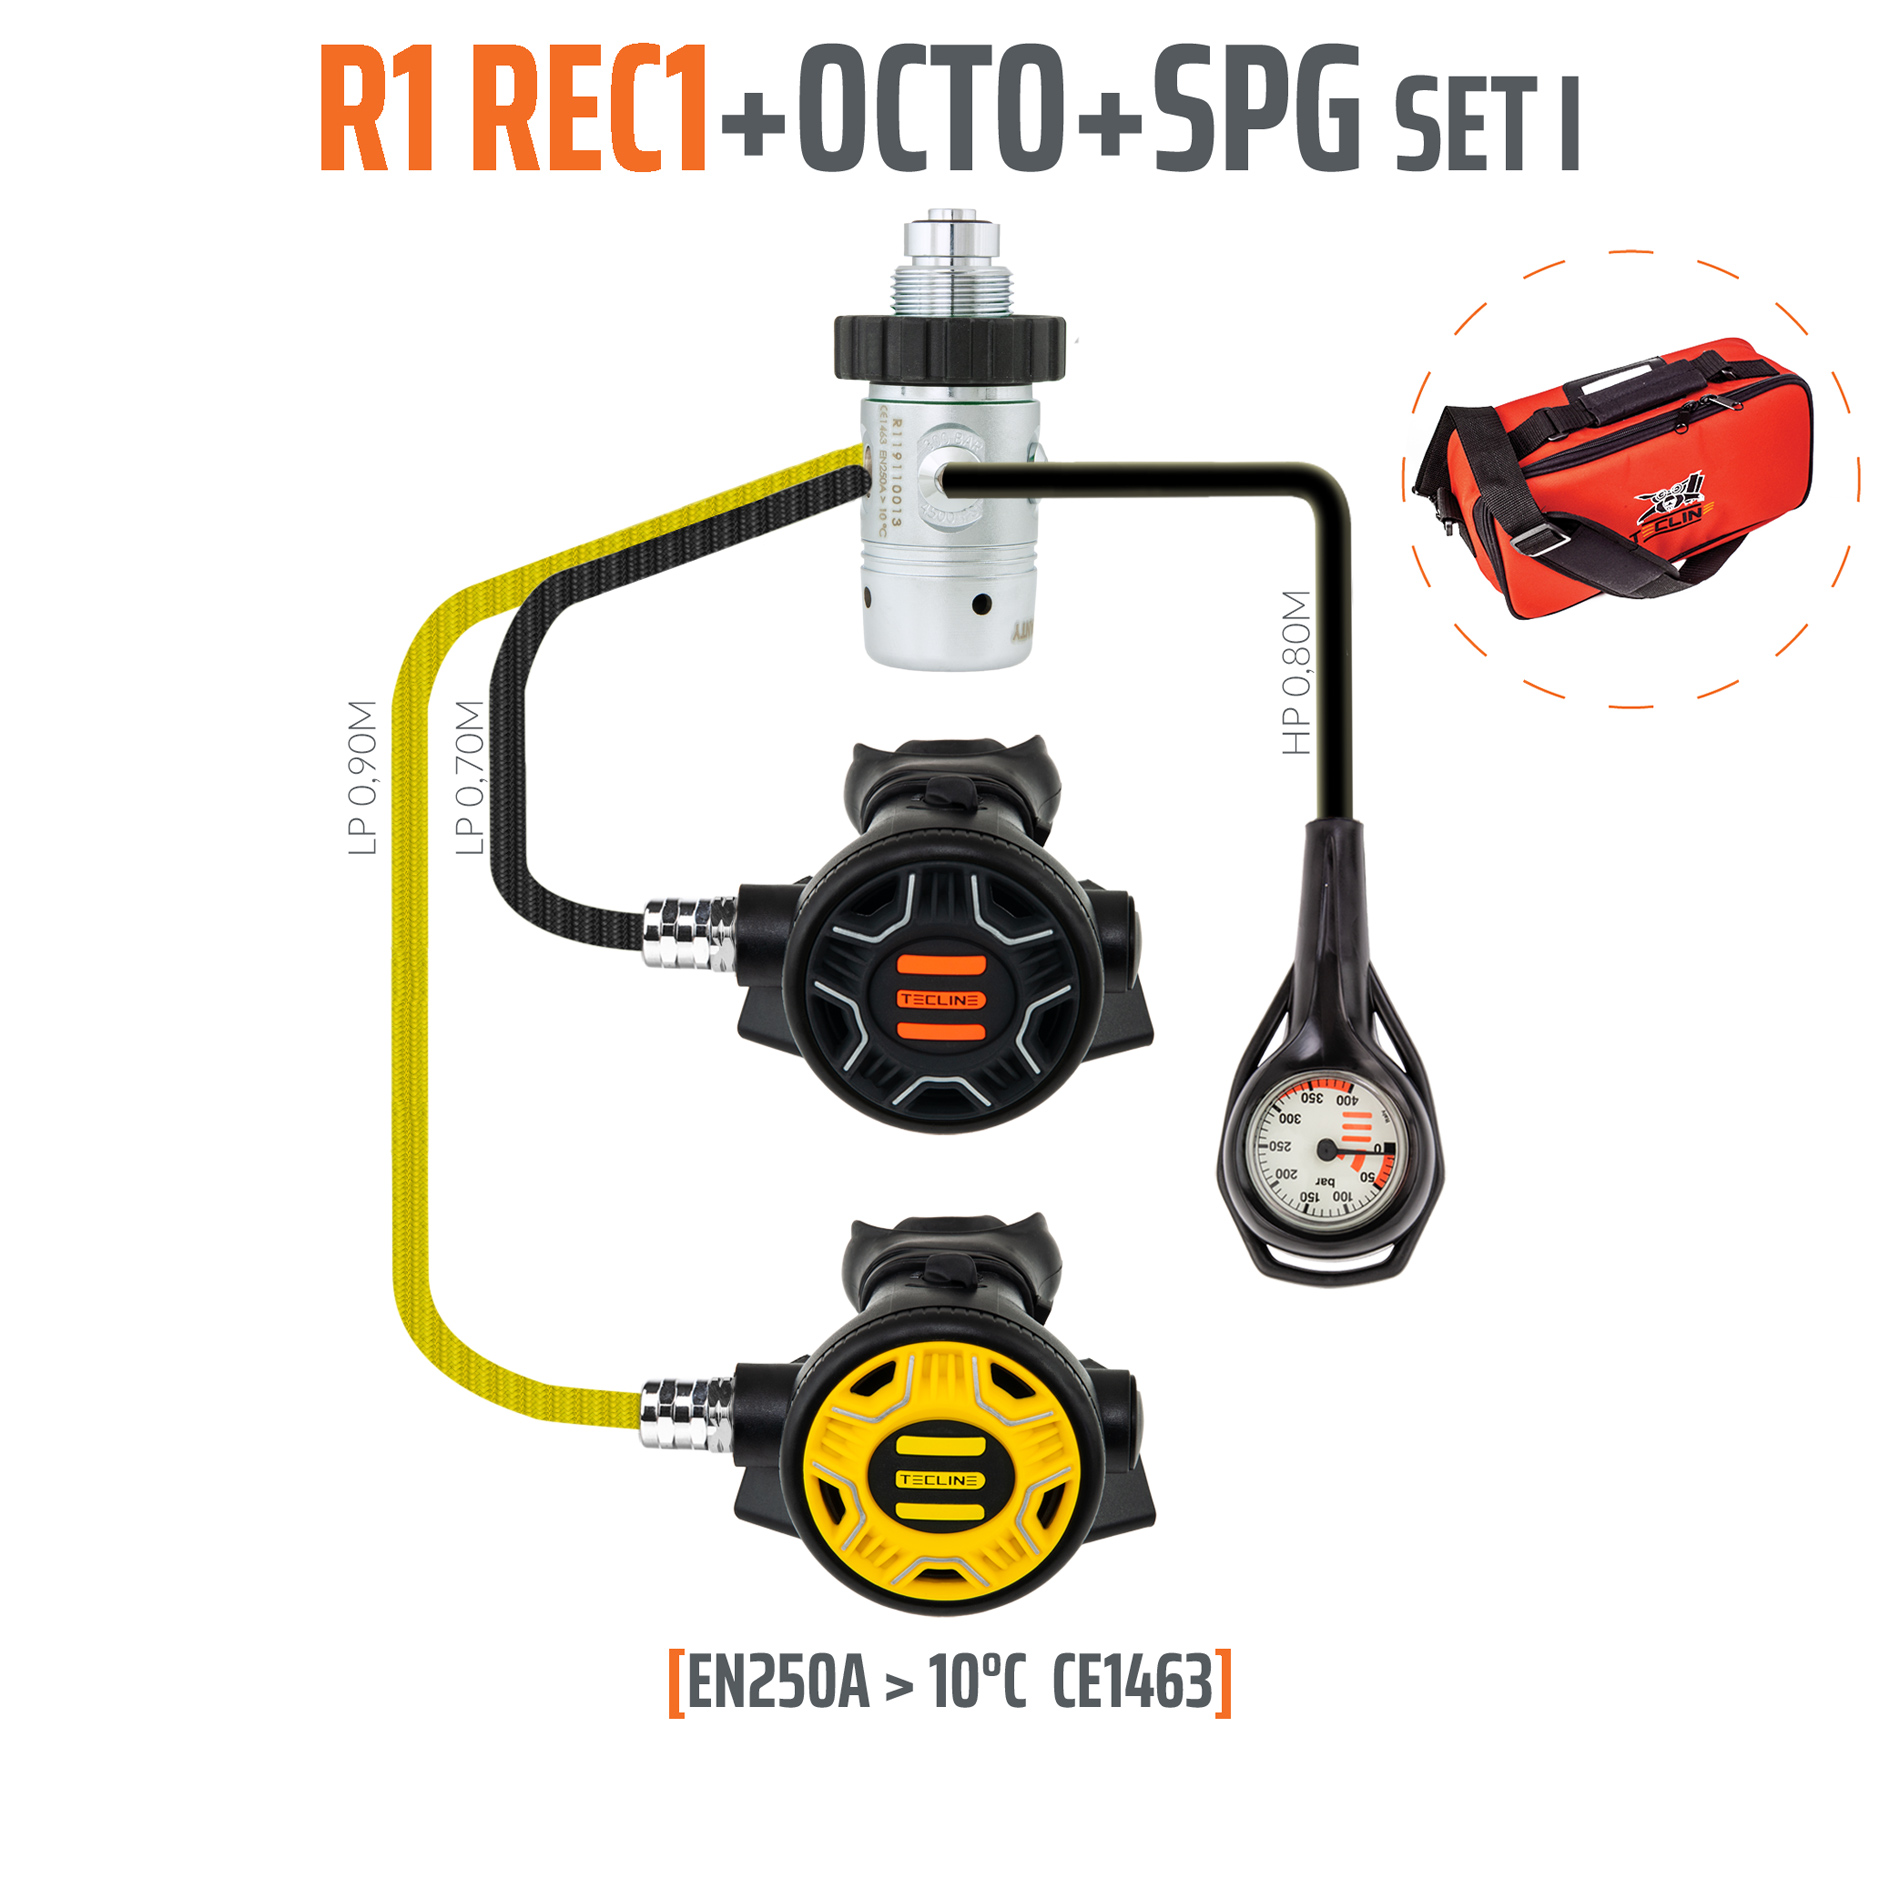 Tecline Regulator R1 REC1 set I with octo and SPG – EN250A > 10°C